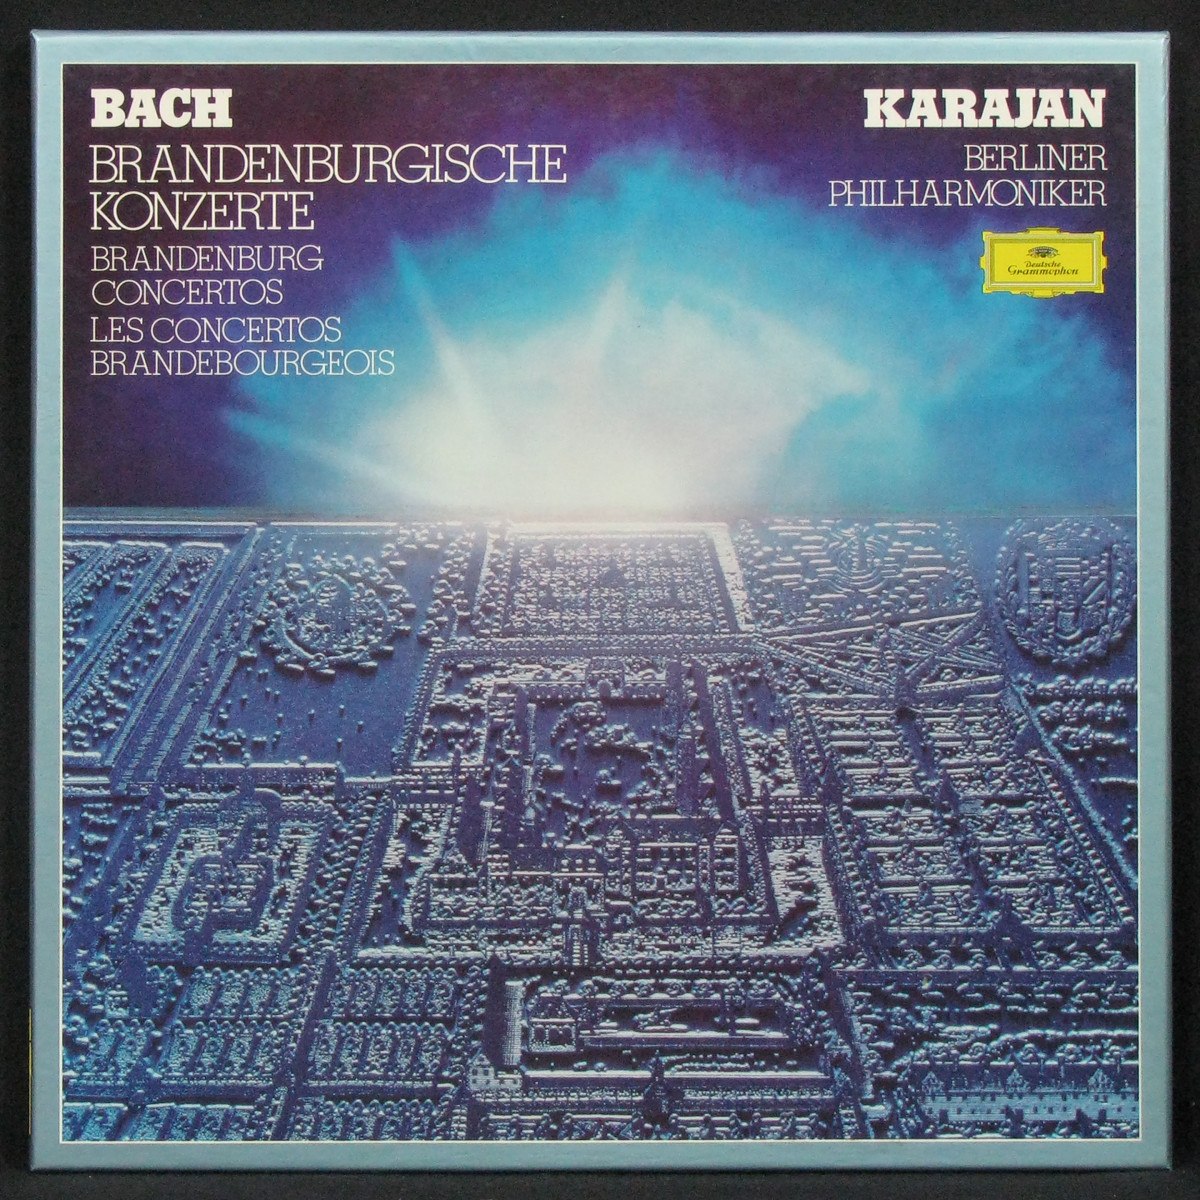 Bach: Brandenburgische Konzerte / Brandenburg Concertos / Les Concertos Brandebourgeois